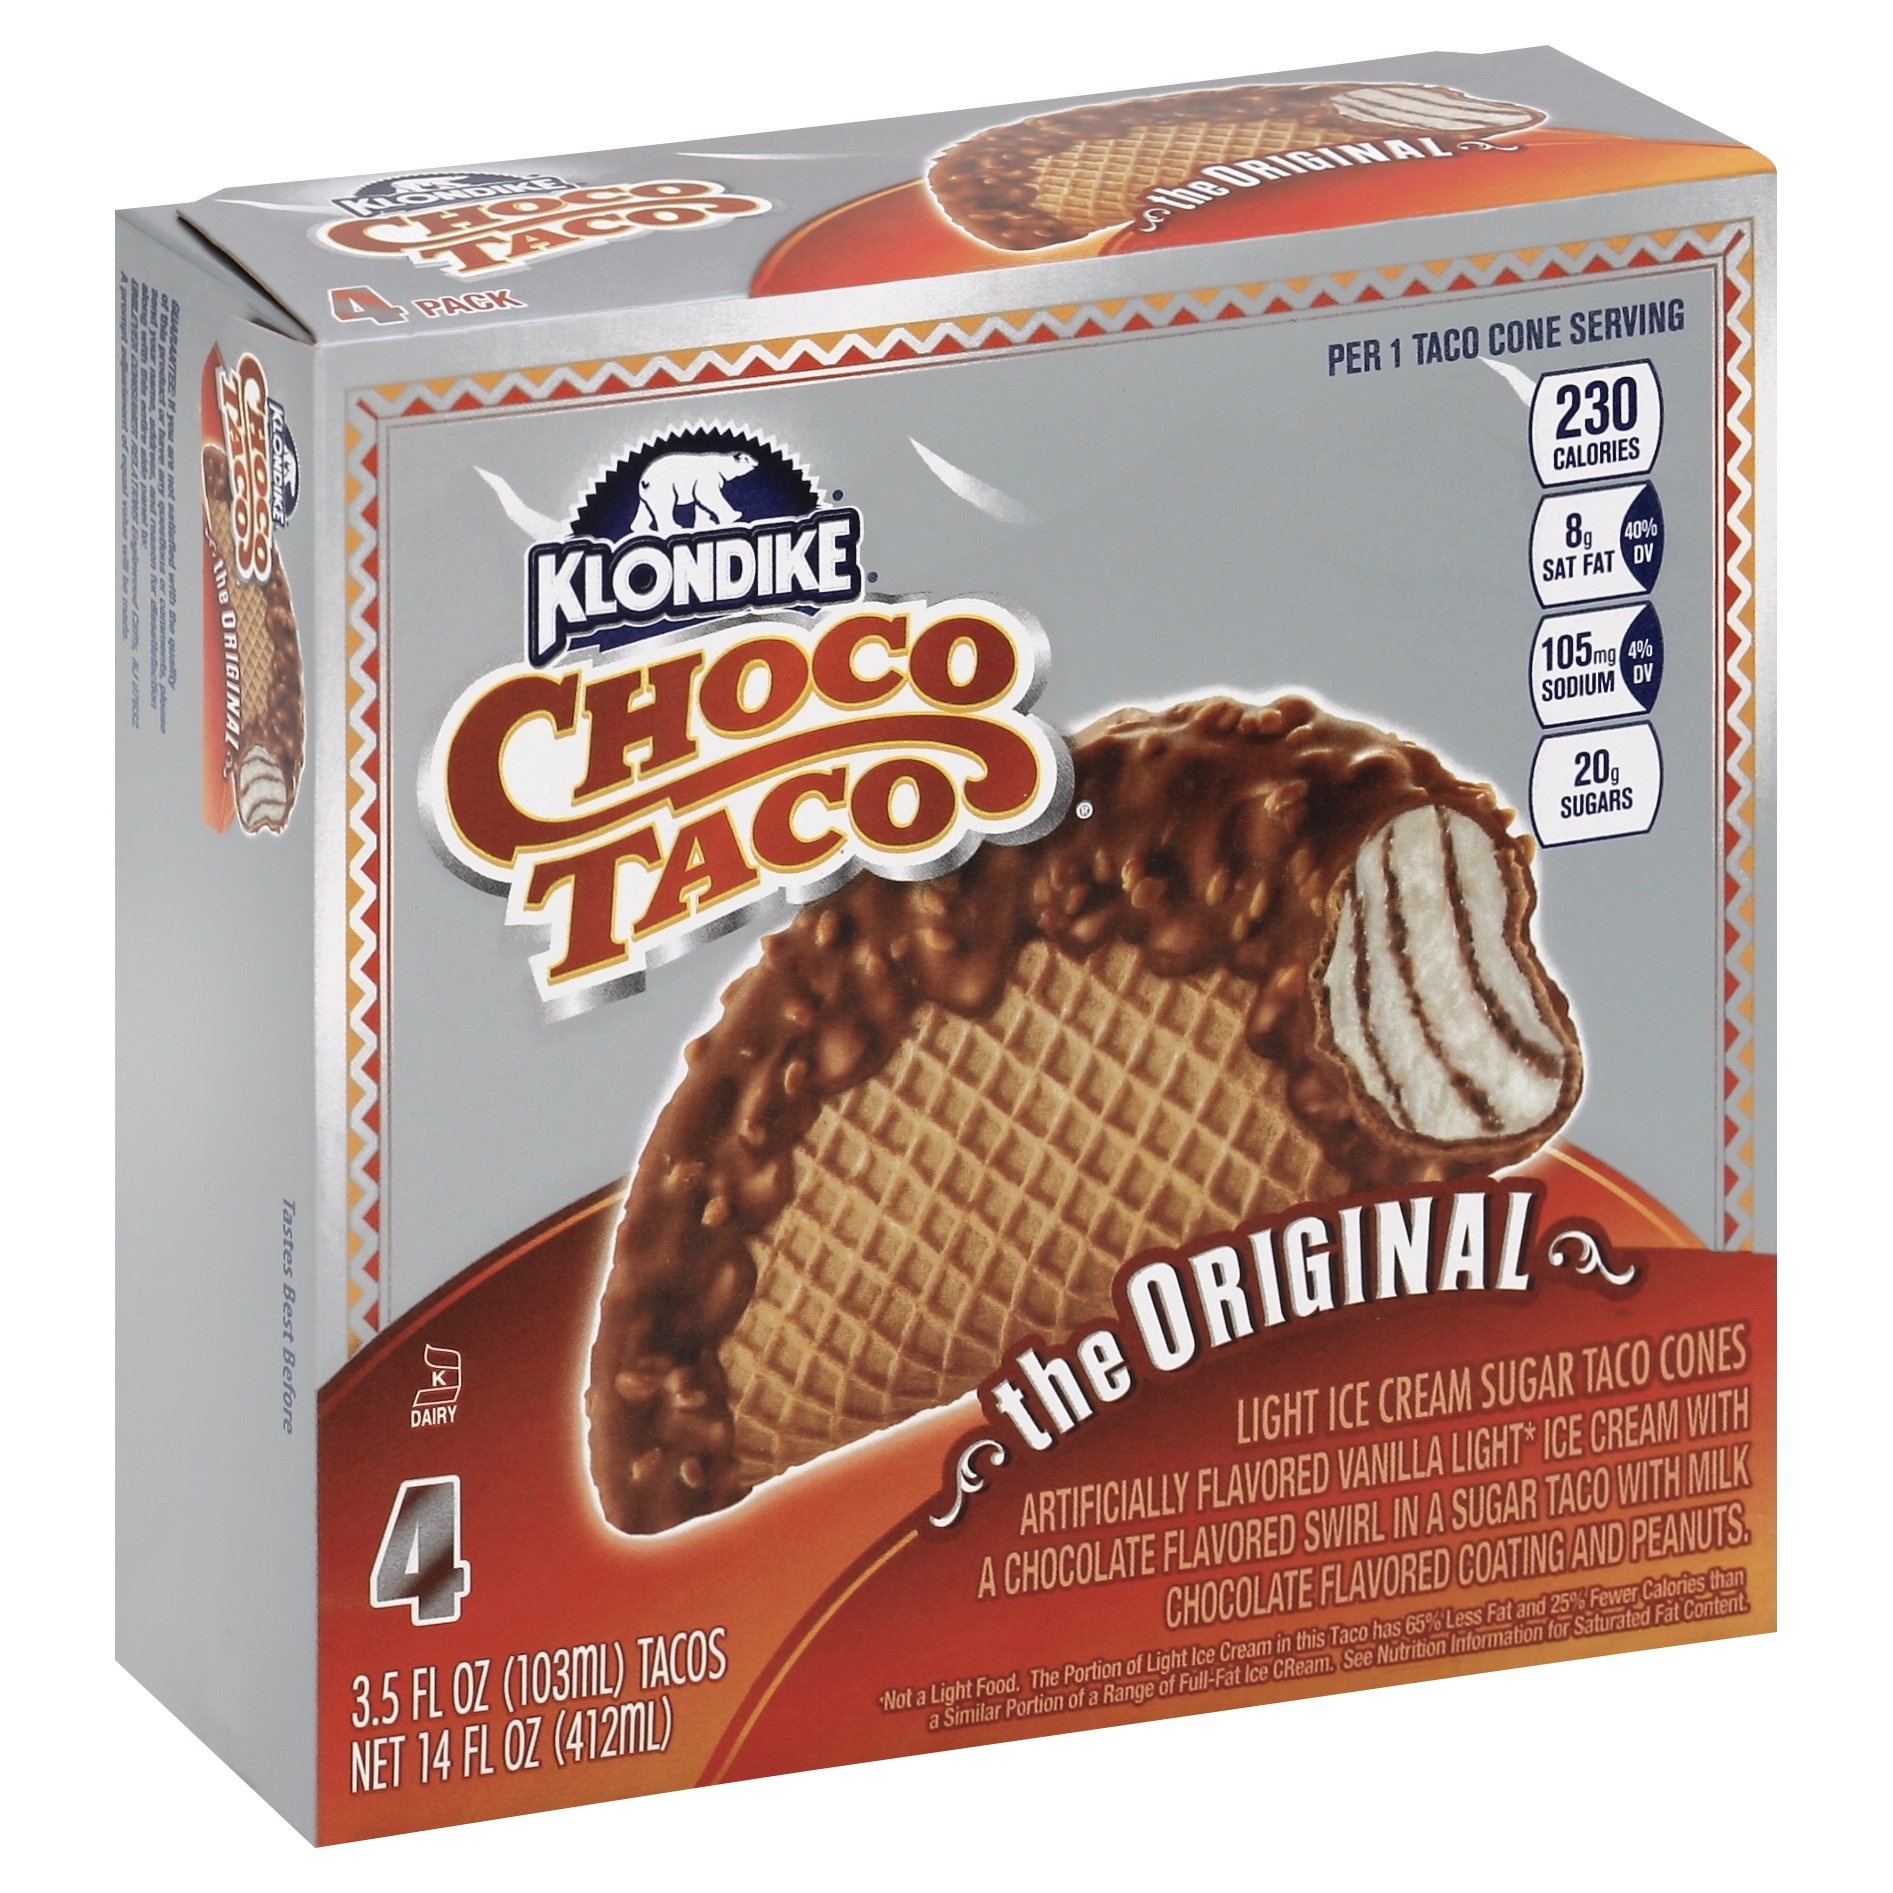 Klondike Choco Taco 4 ct | Shipt